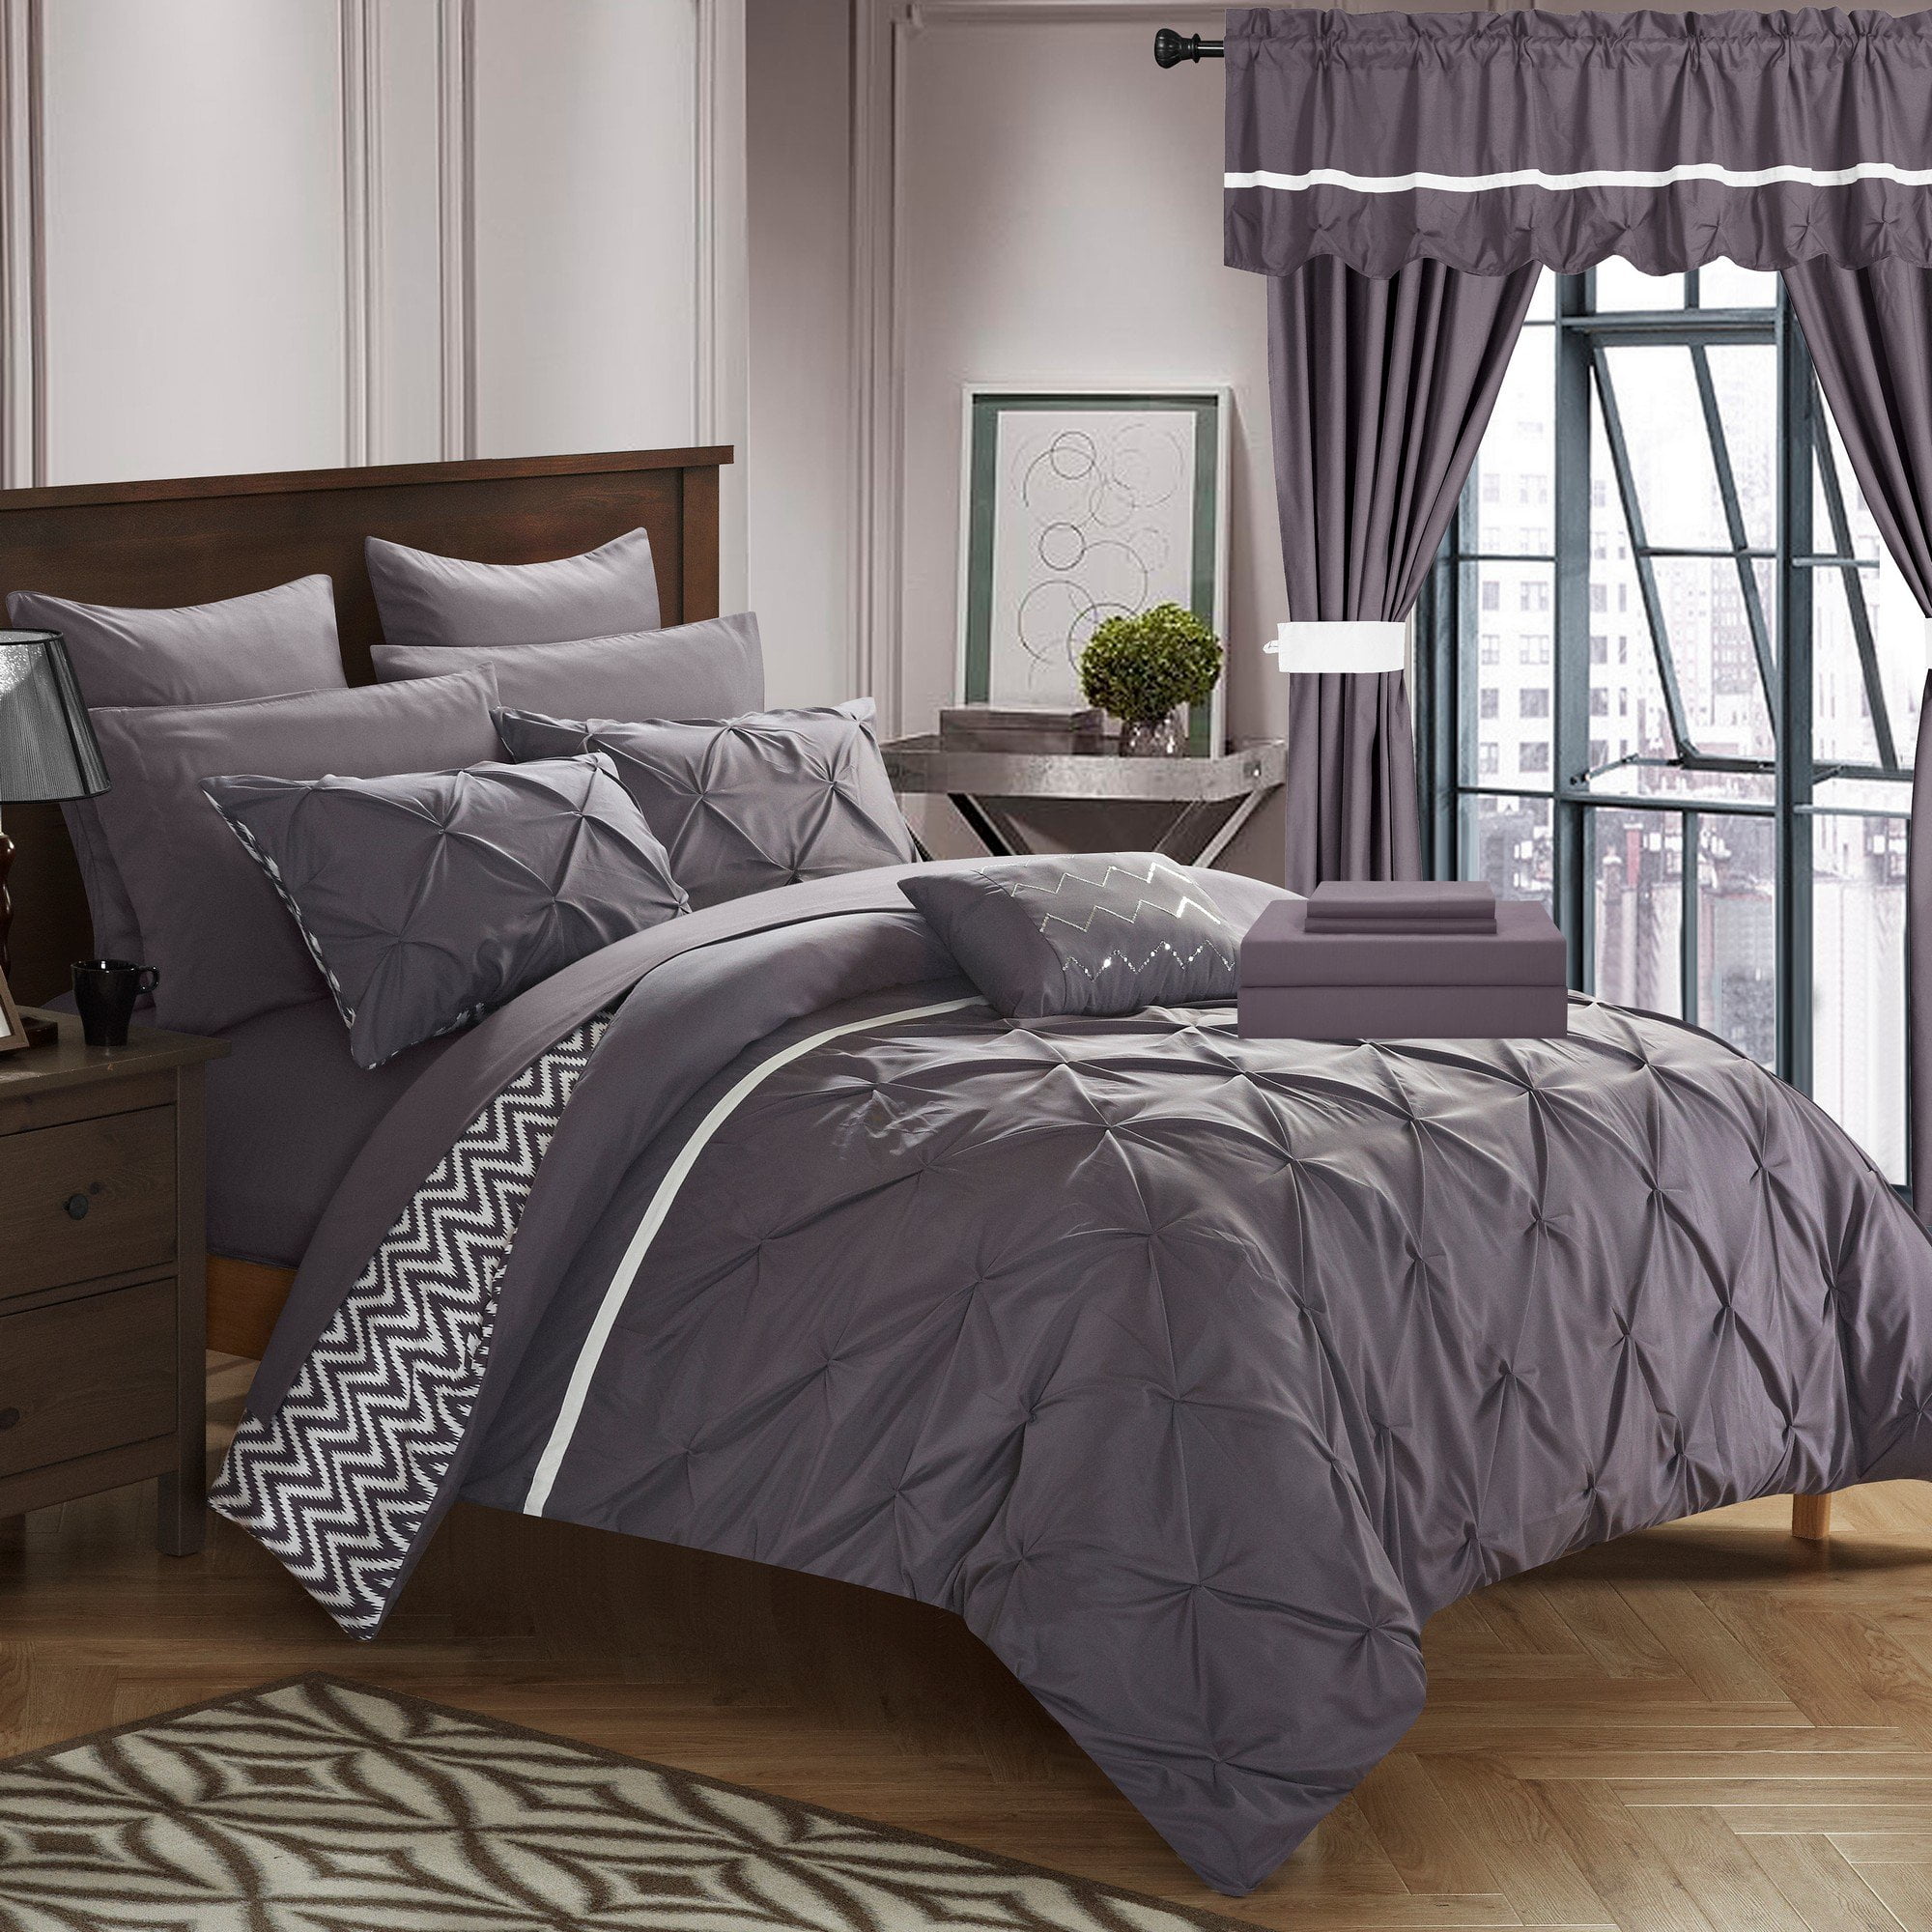 Hudson Luxury 12 PC Bed in a Bag Comforter Set Includes Comforter Sheets Sham 